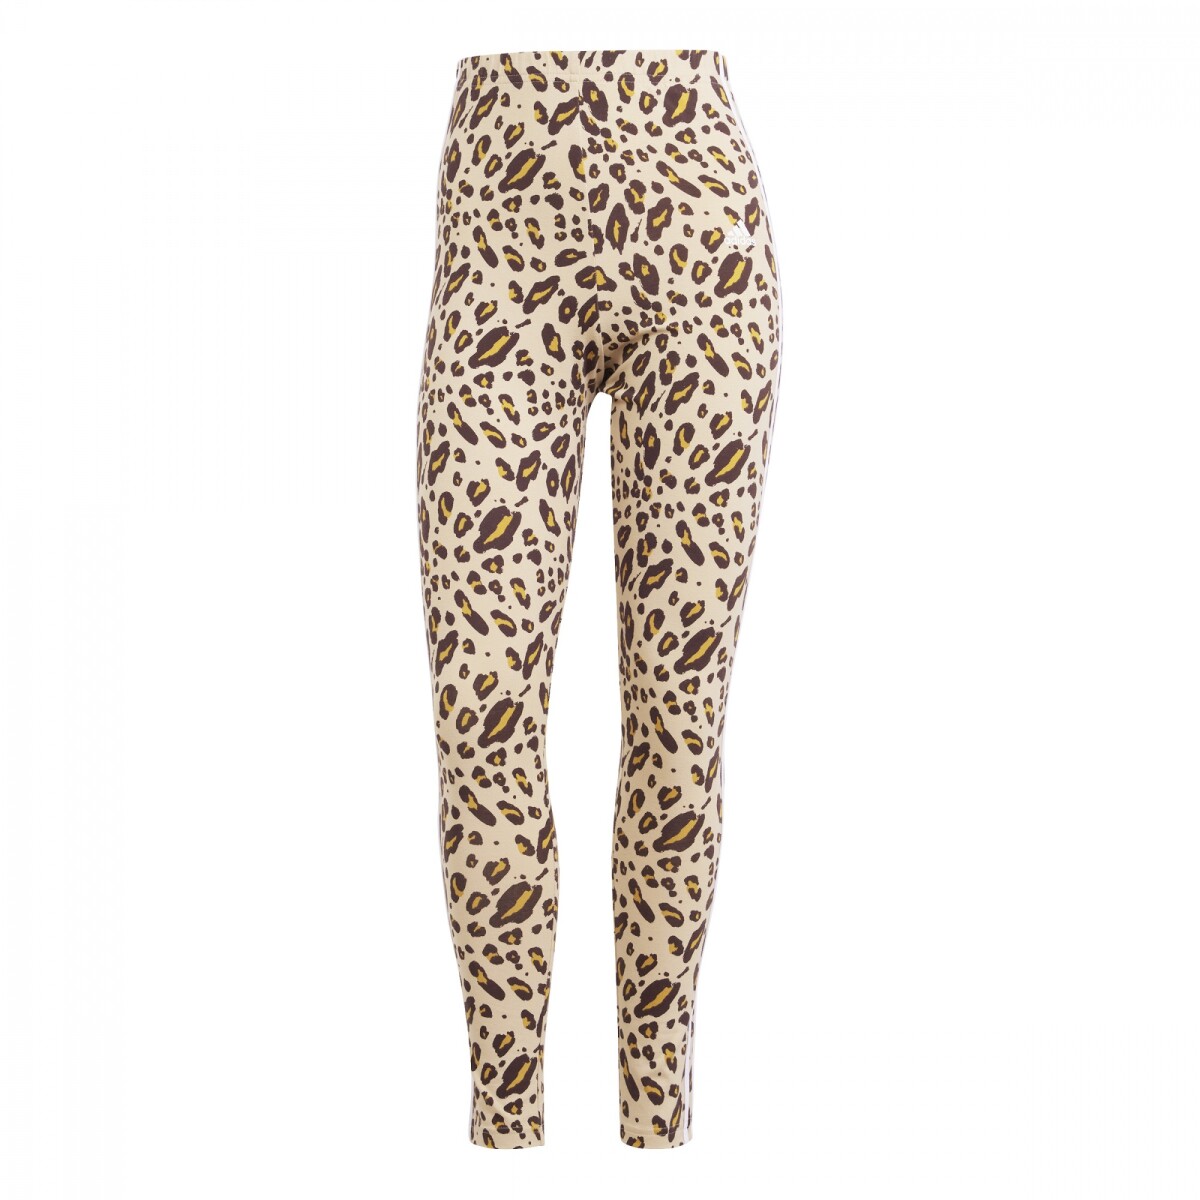 Calza de Mujer Adidas Essentials Animal Print - Beige - Leopardo 